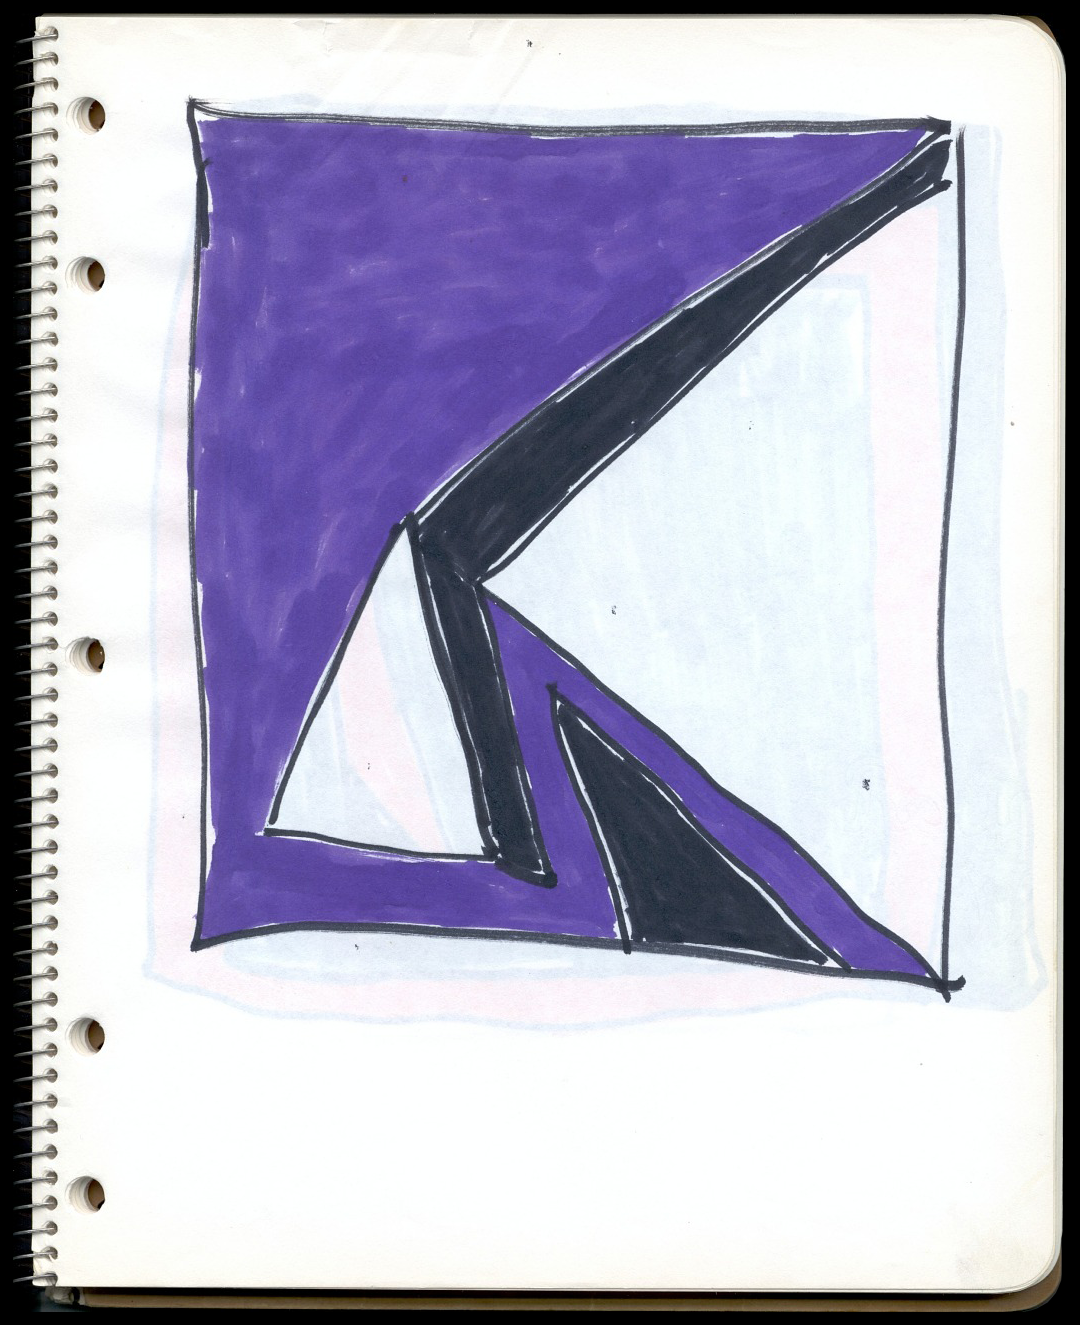 Frank Stella, sketchbook, 1966